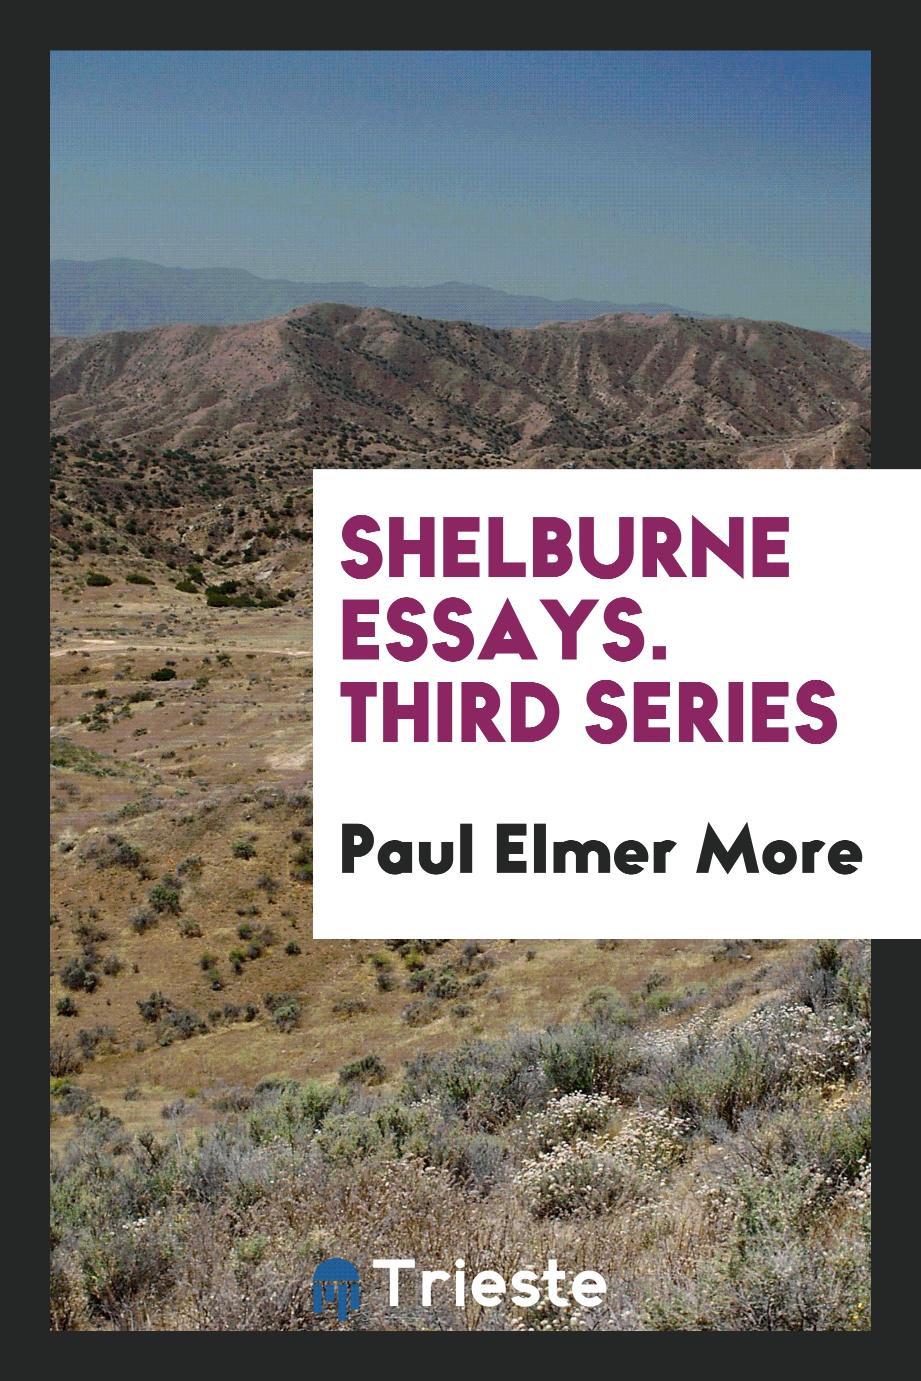 Shelburne essays. Third series